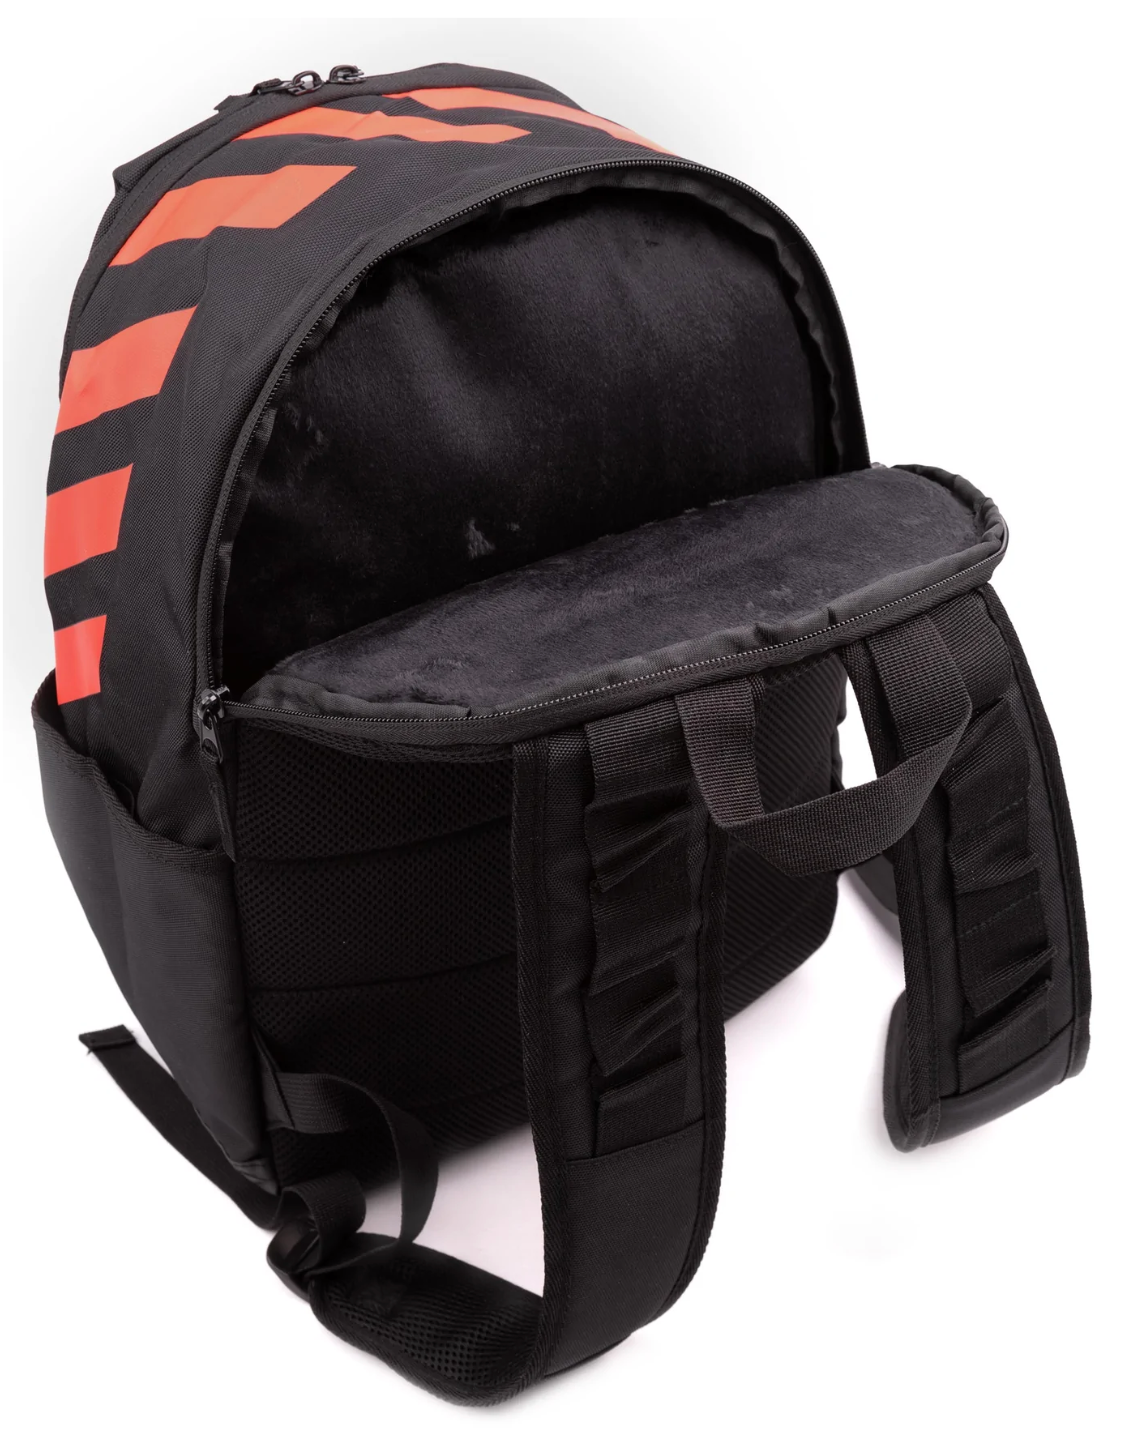 Roblox Premium RPM SB Skateboarding School Gamer Backpack Black Orange NEW